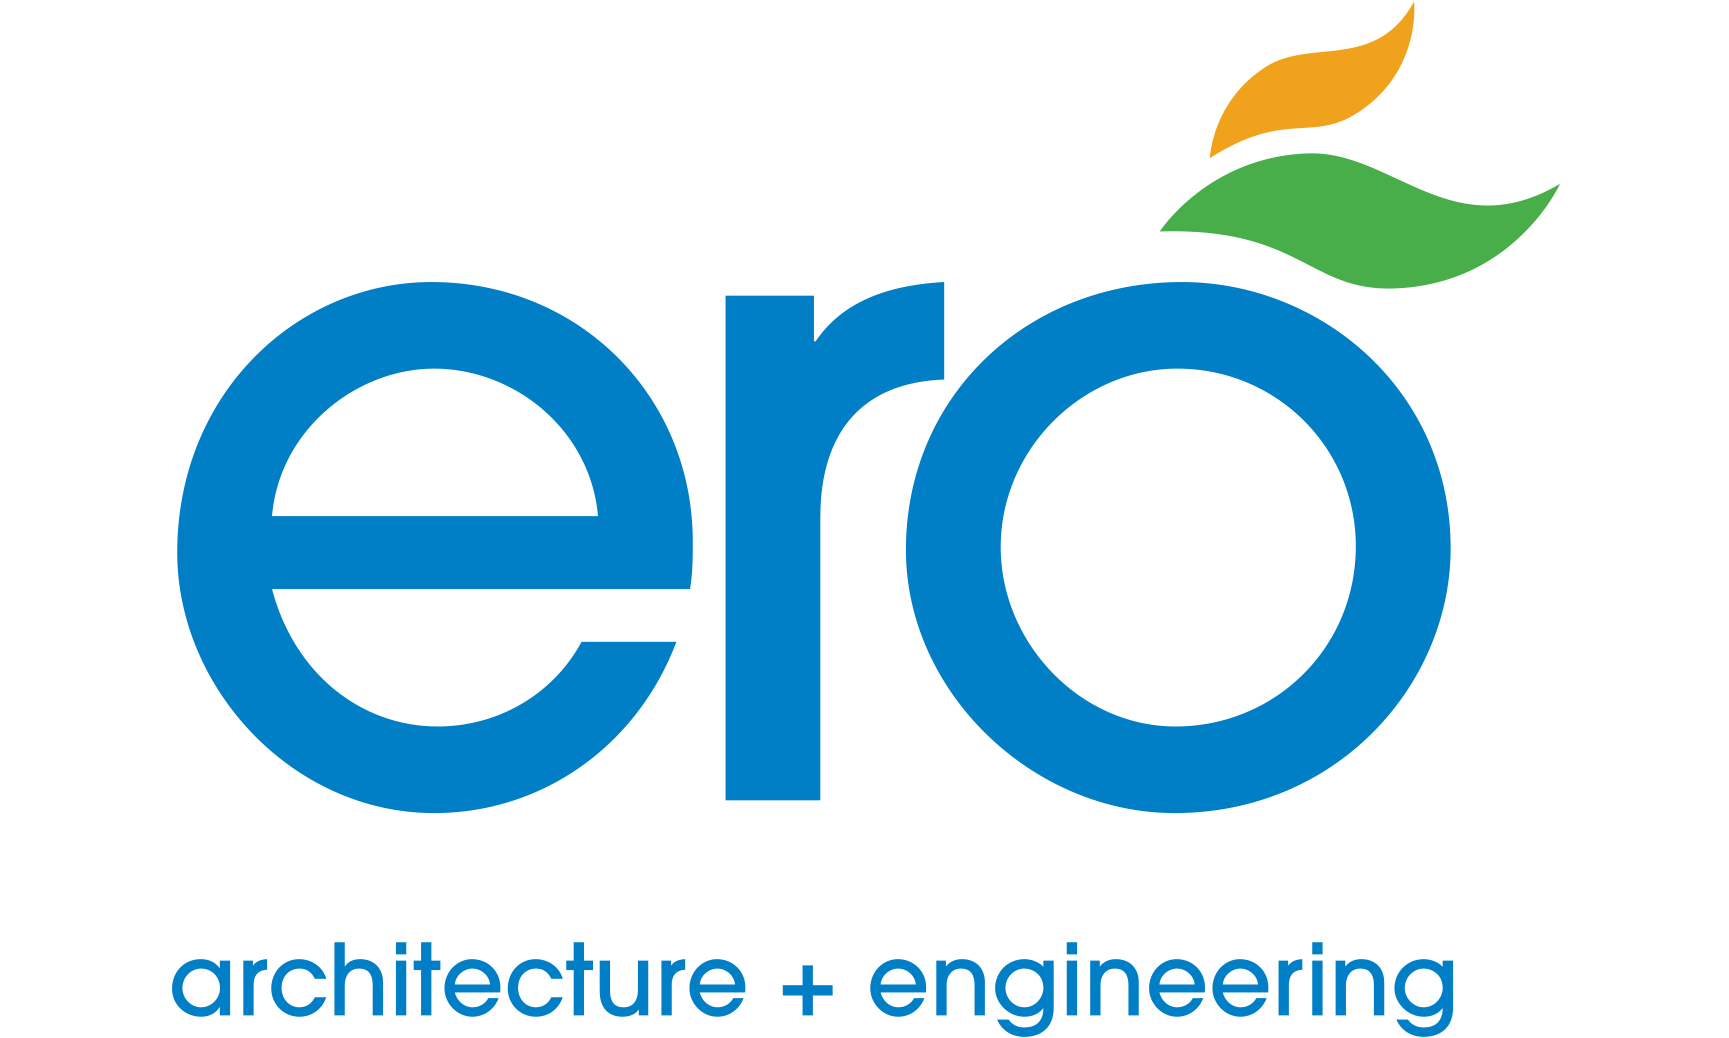 ERO architecture + engineering logo